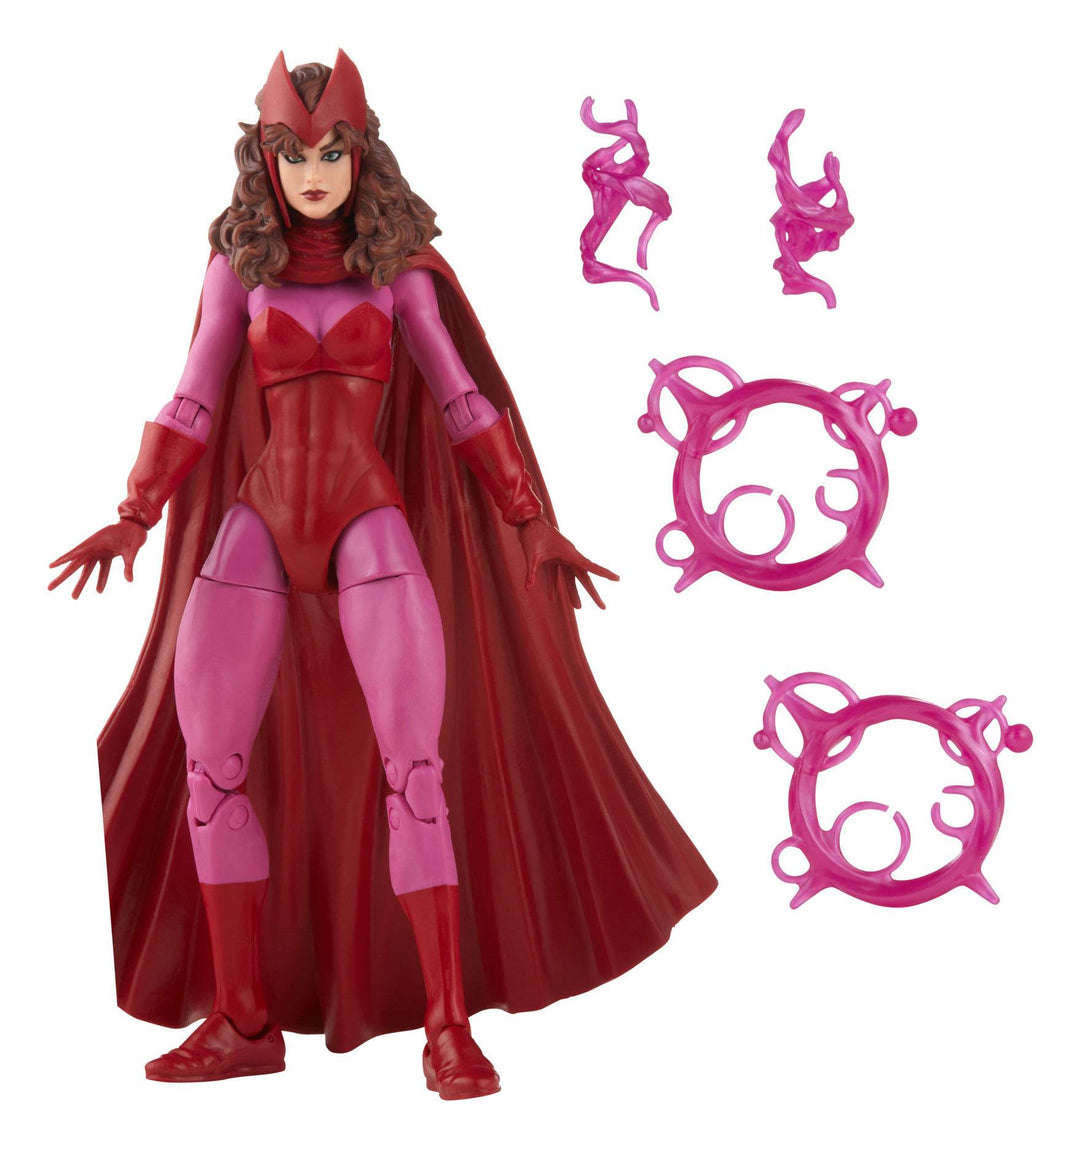 Hasbro Marvel Legends Series Scarlet Witch Retro Action Figure